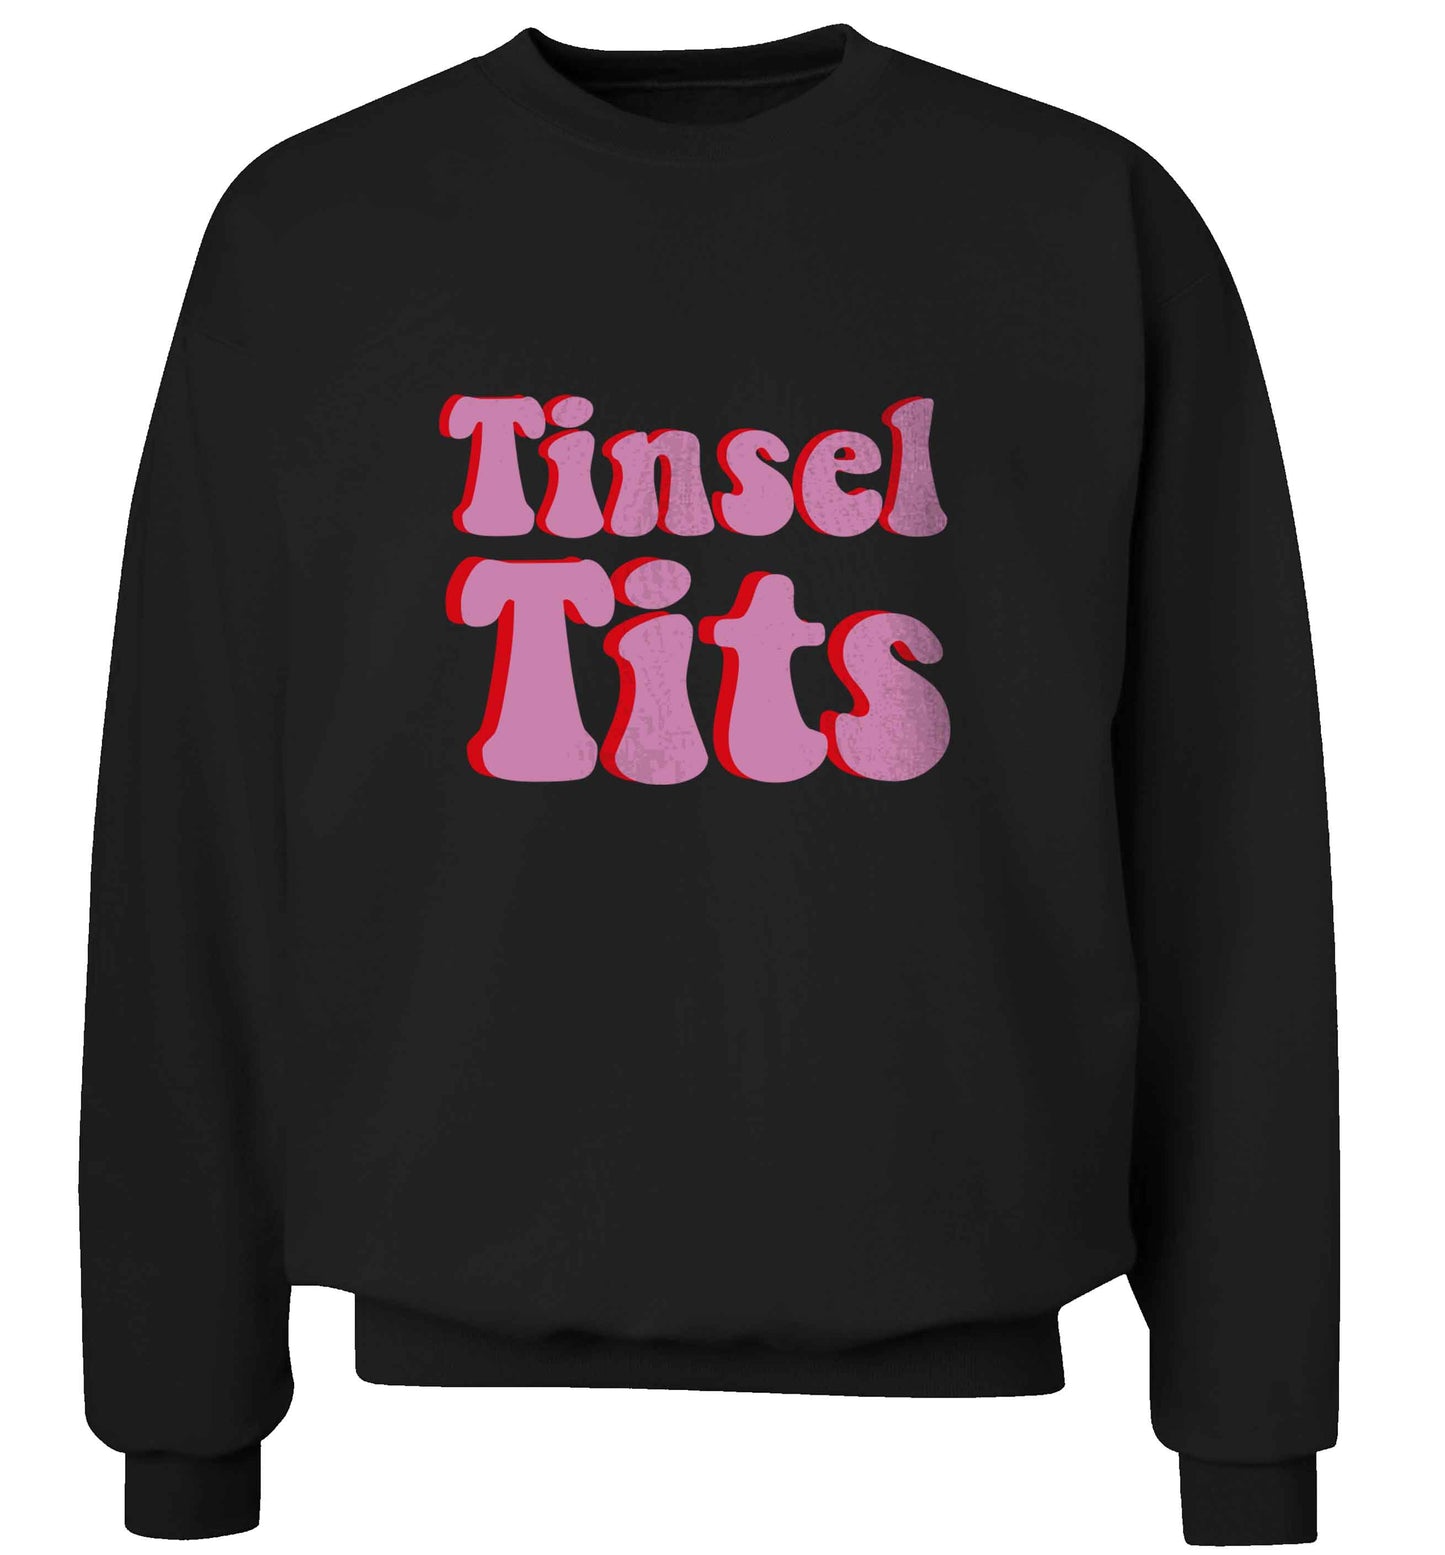 Tinsel tits adult's unisex black sweater 2XL